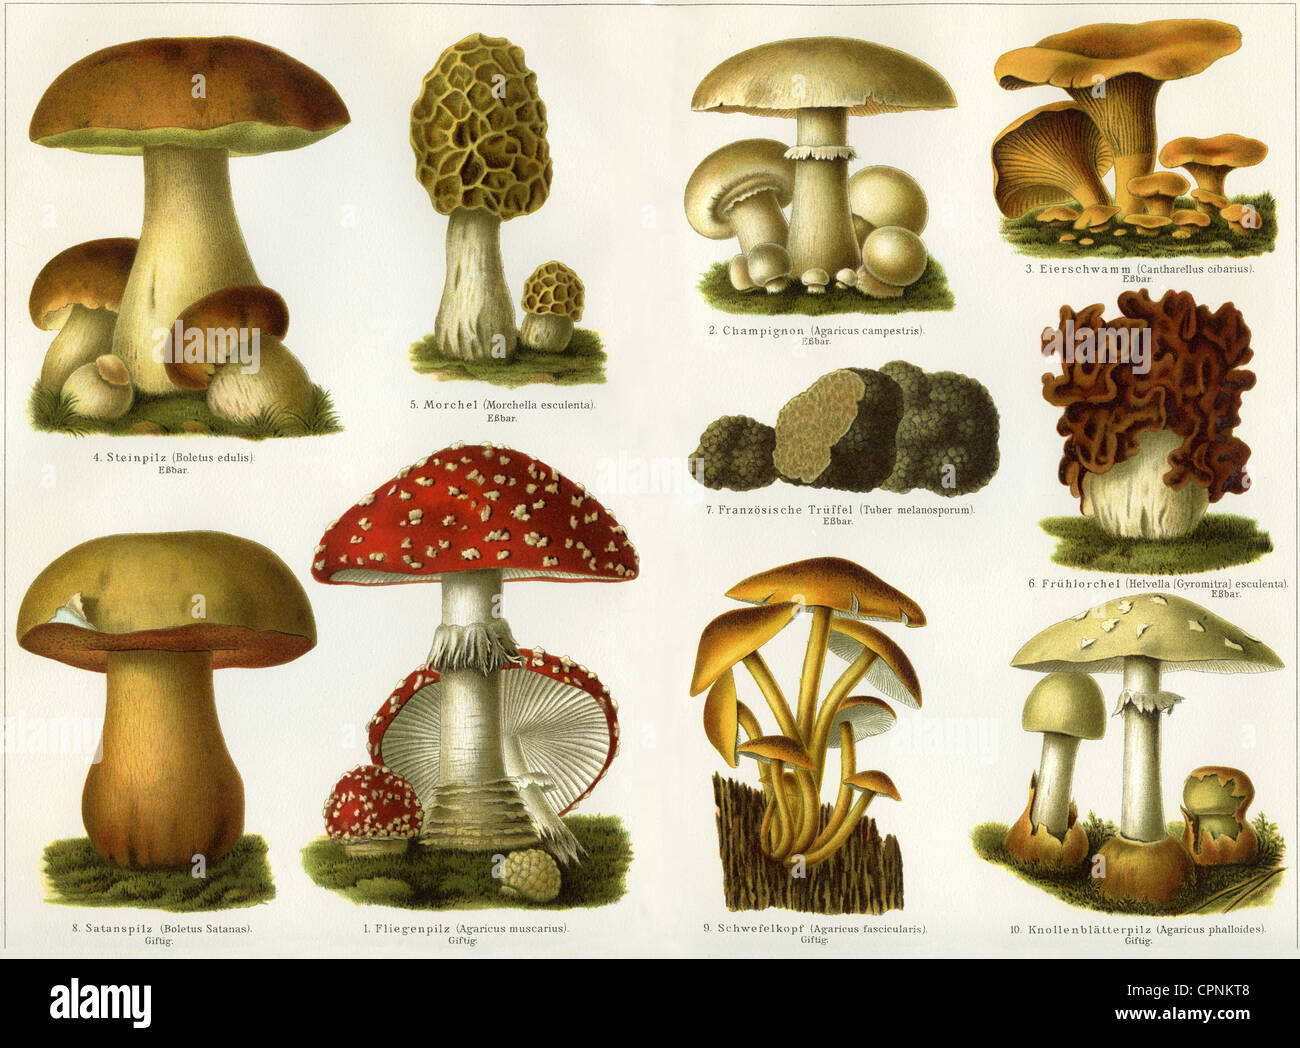 botanik, Pilze, Synopsis, essbare Pilze: Essbare Steinpilze, essbare ...